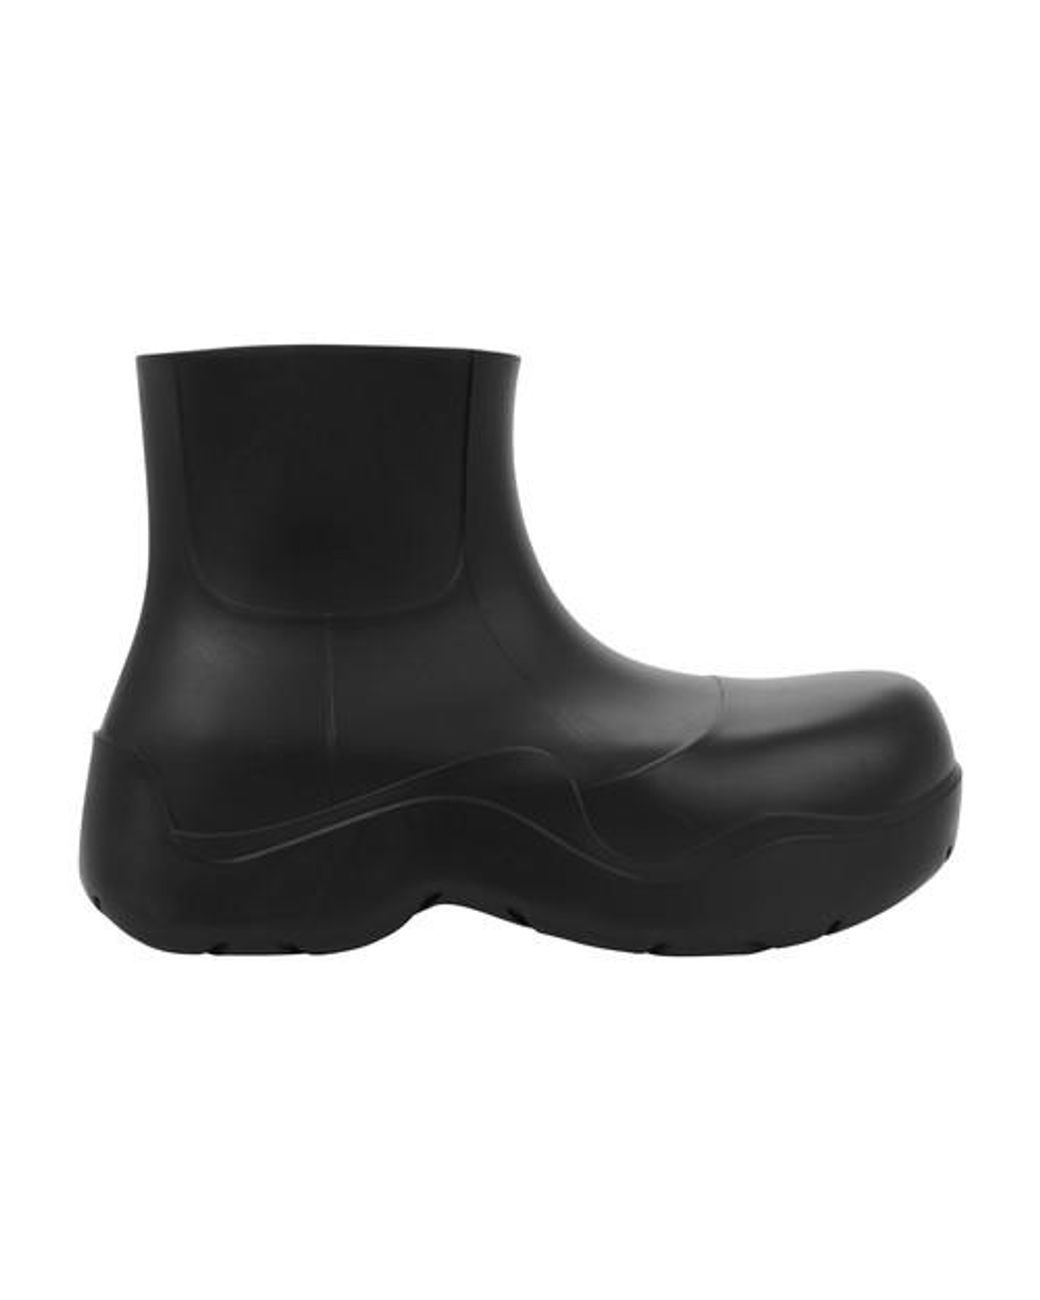 Bottega Veneta Bv Puddle Boots in Black - Lyst